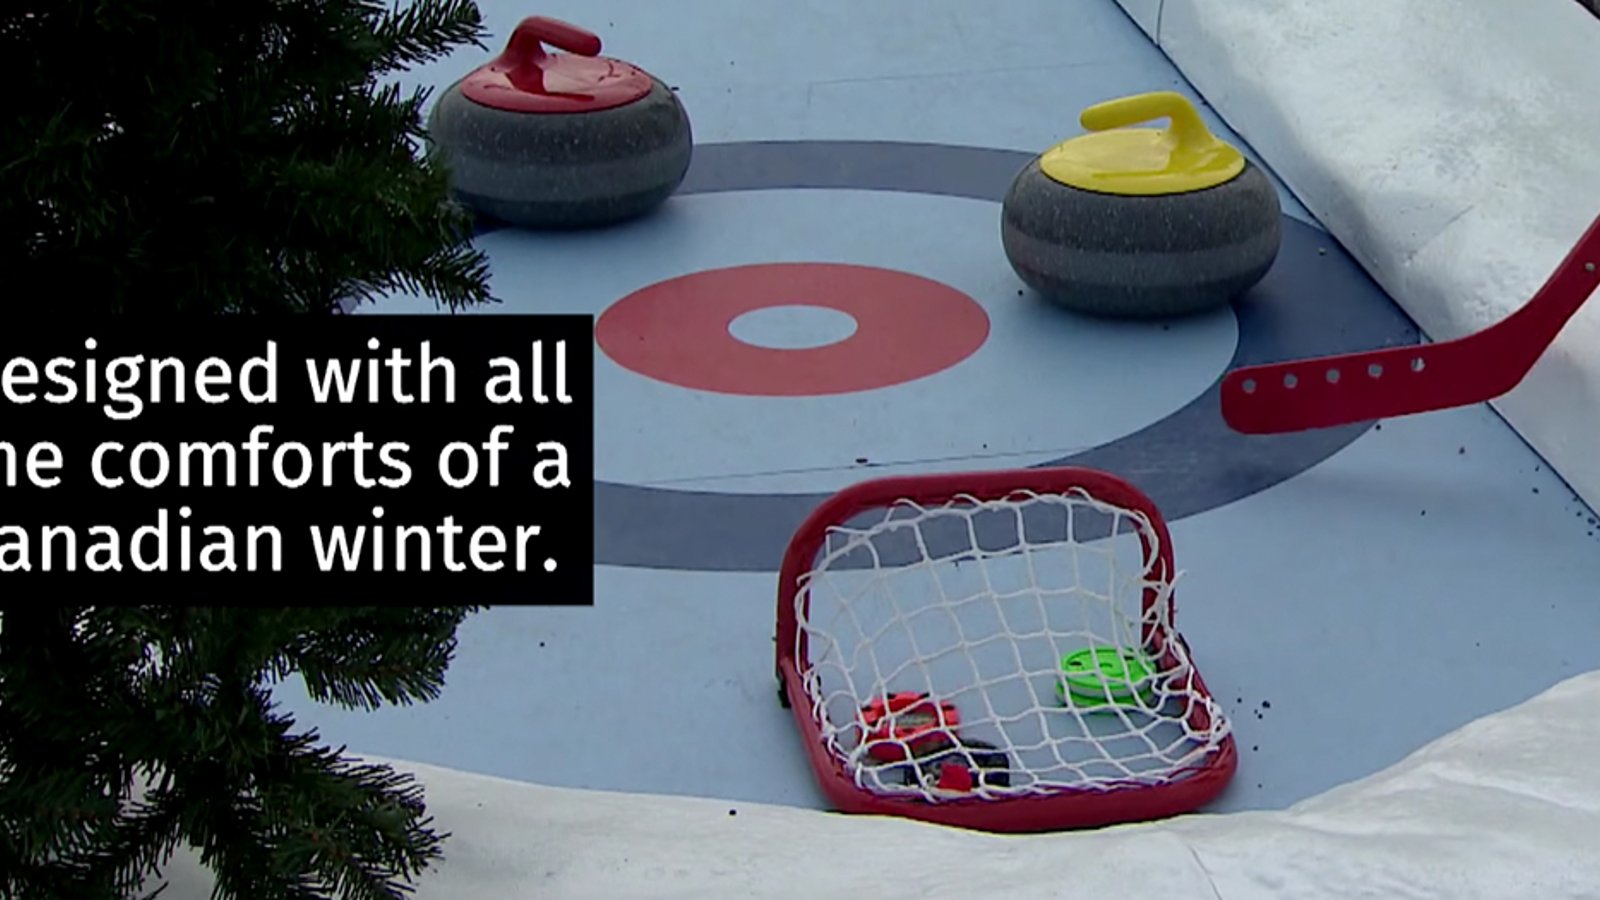 Check out Frozen Fairways an incredible hockey-themed mini-golf course in Calgary